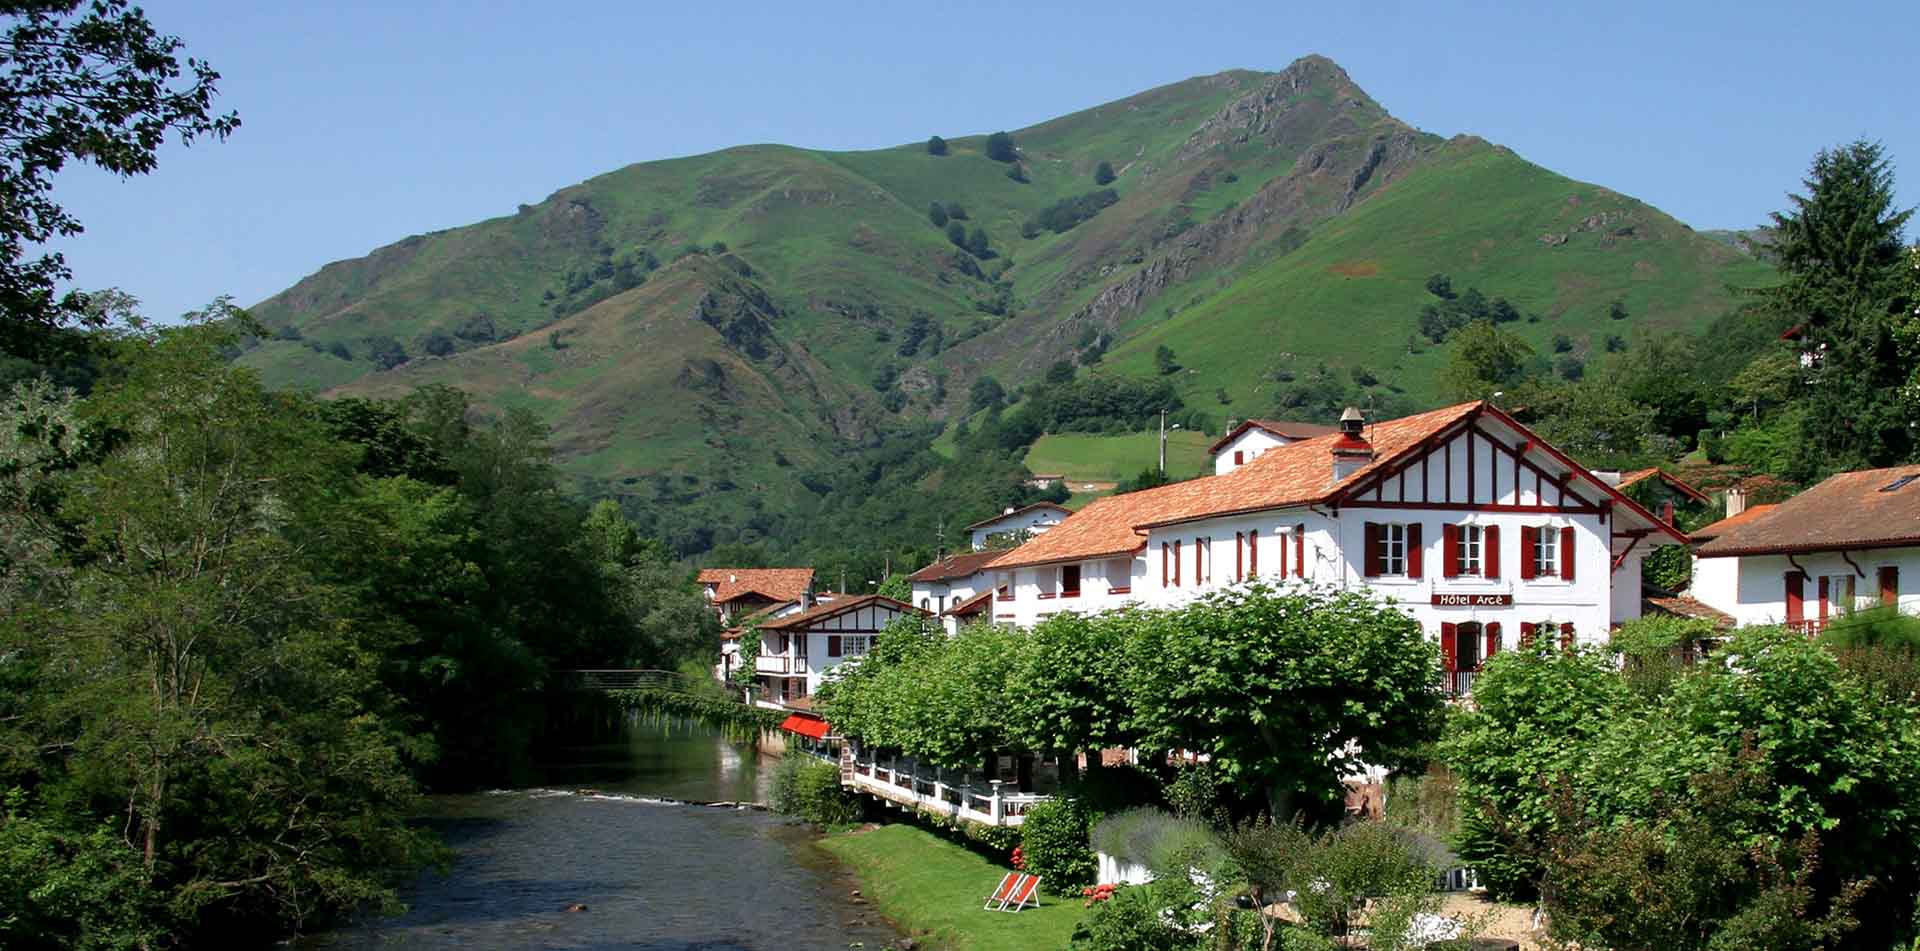 Hotel Arce Basque Pyrenees, Spain & France